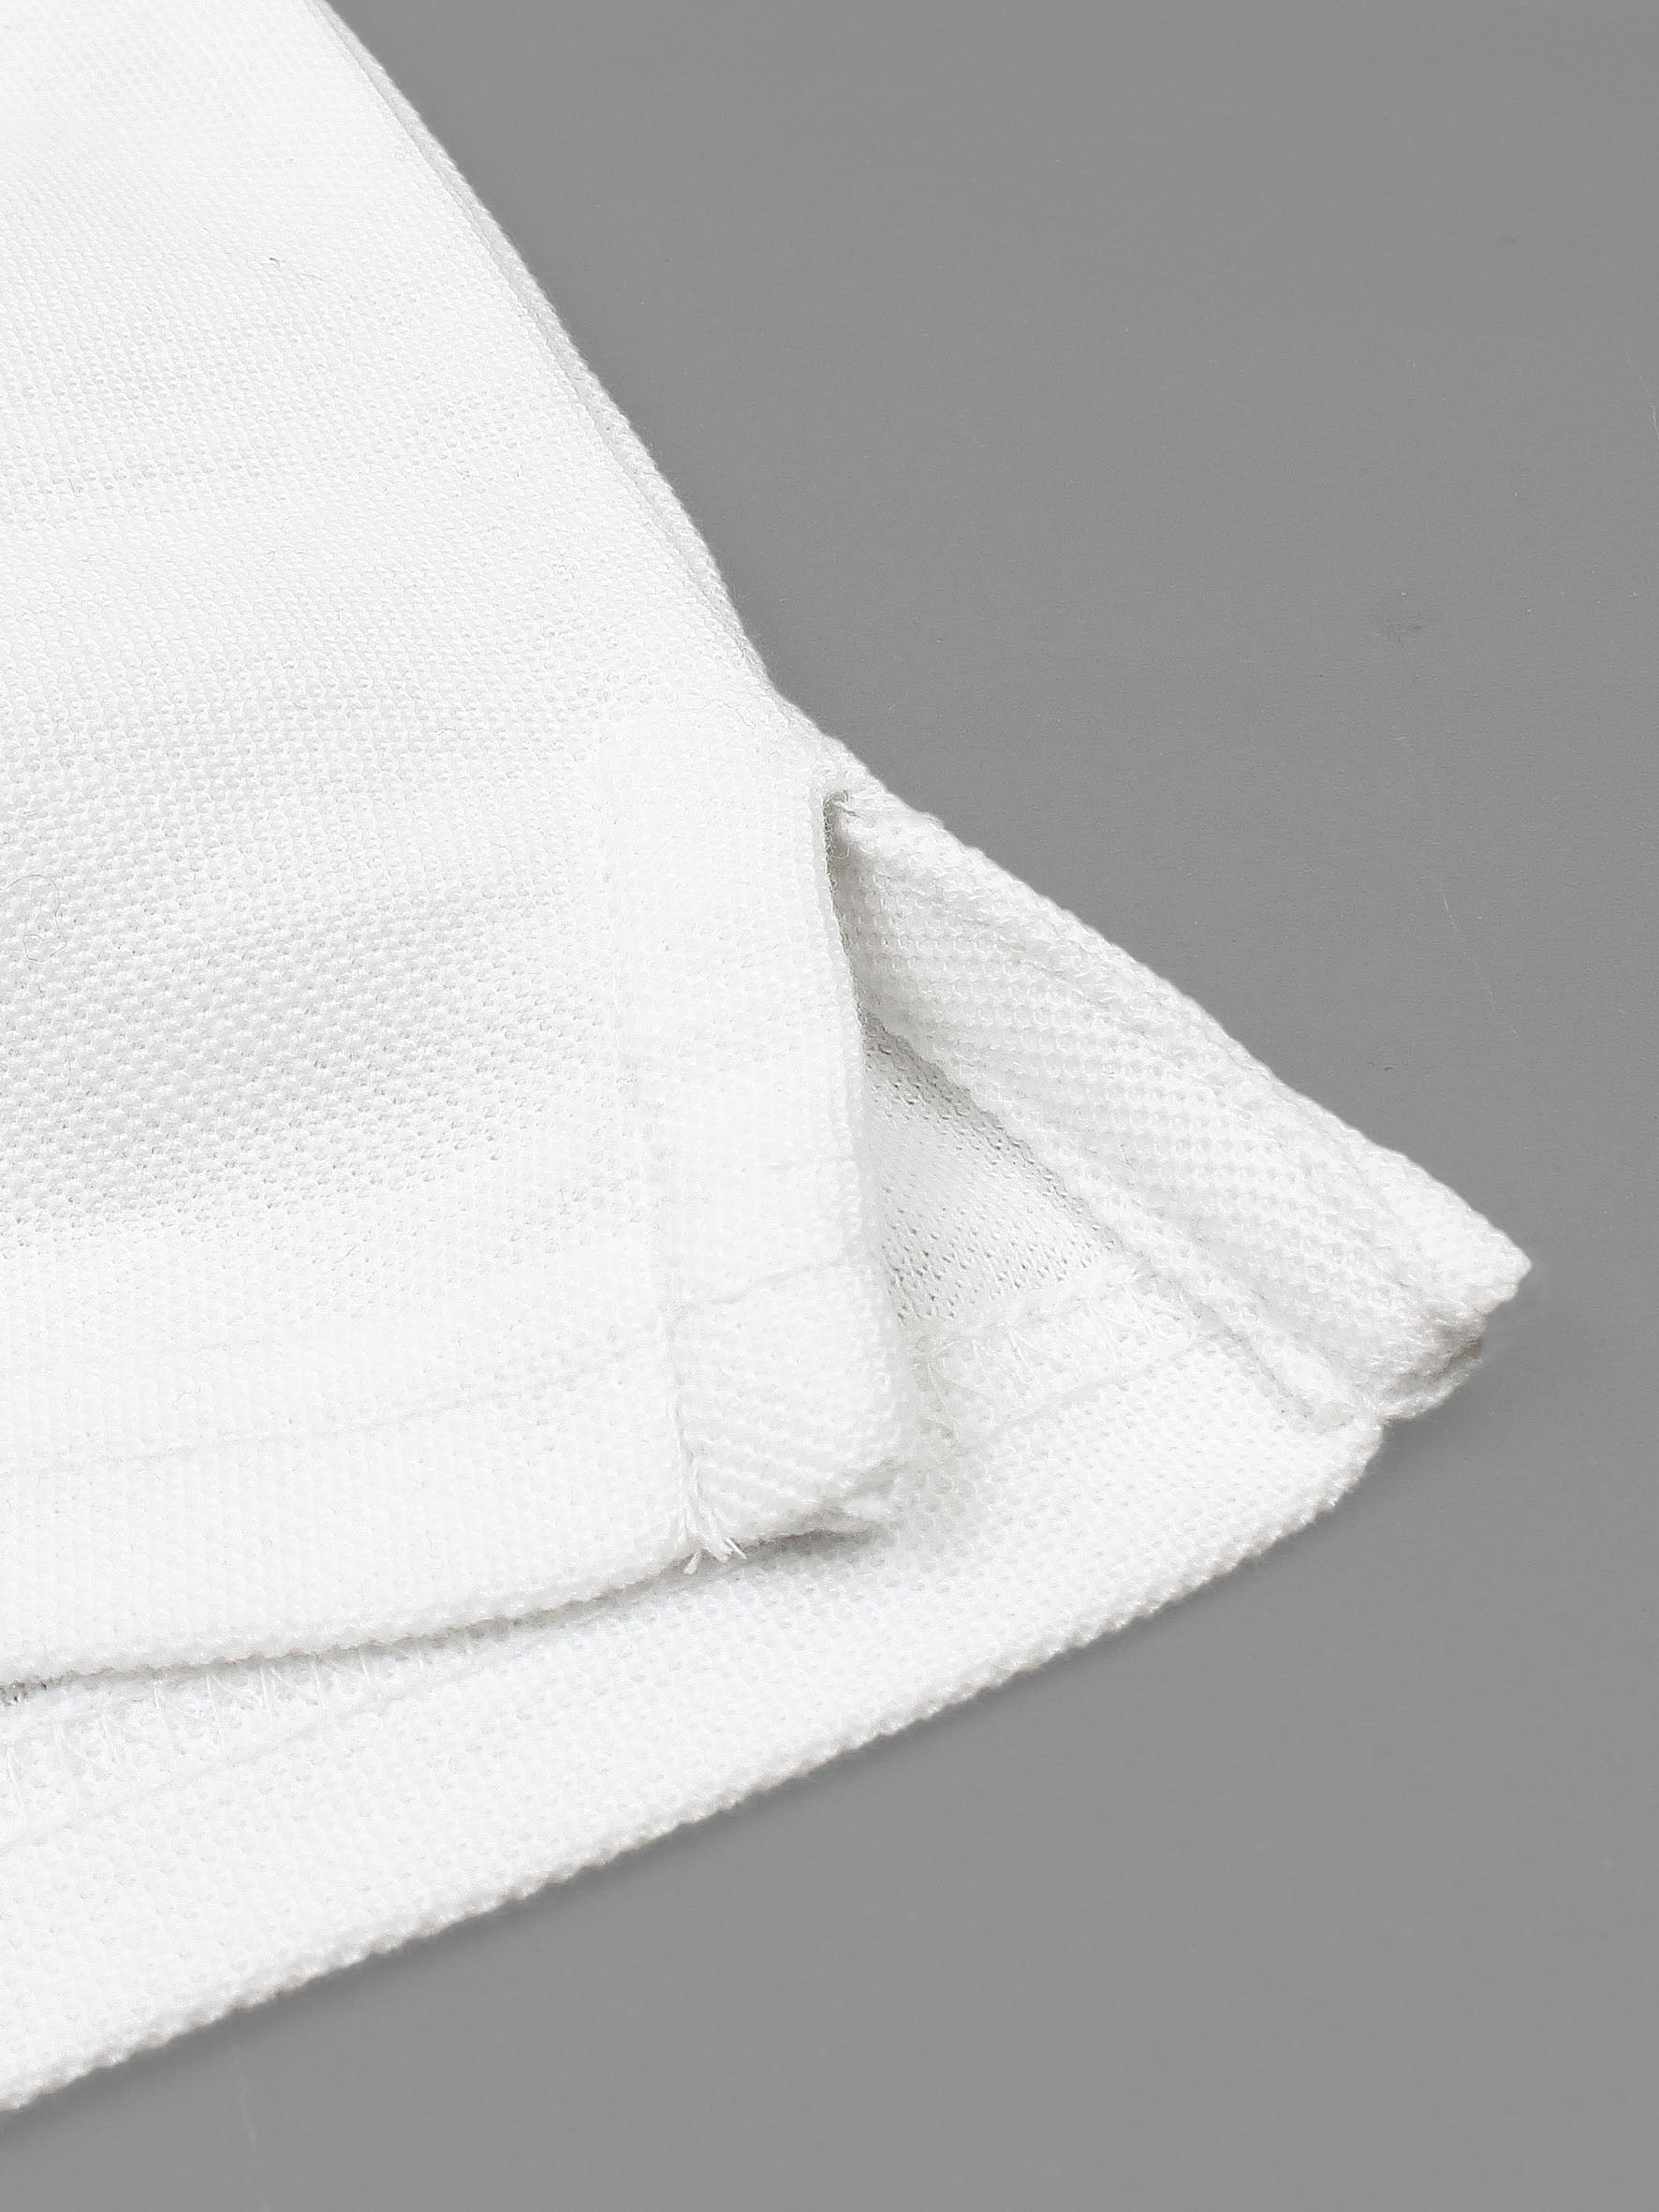 BLMN soft cotton white polo shirt(00320)